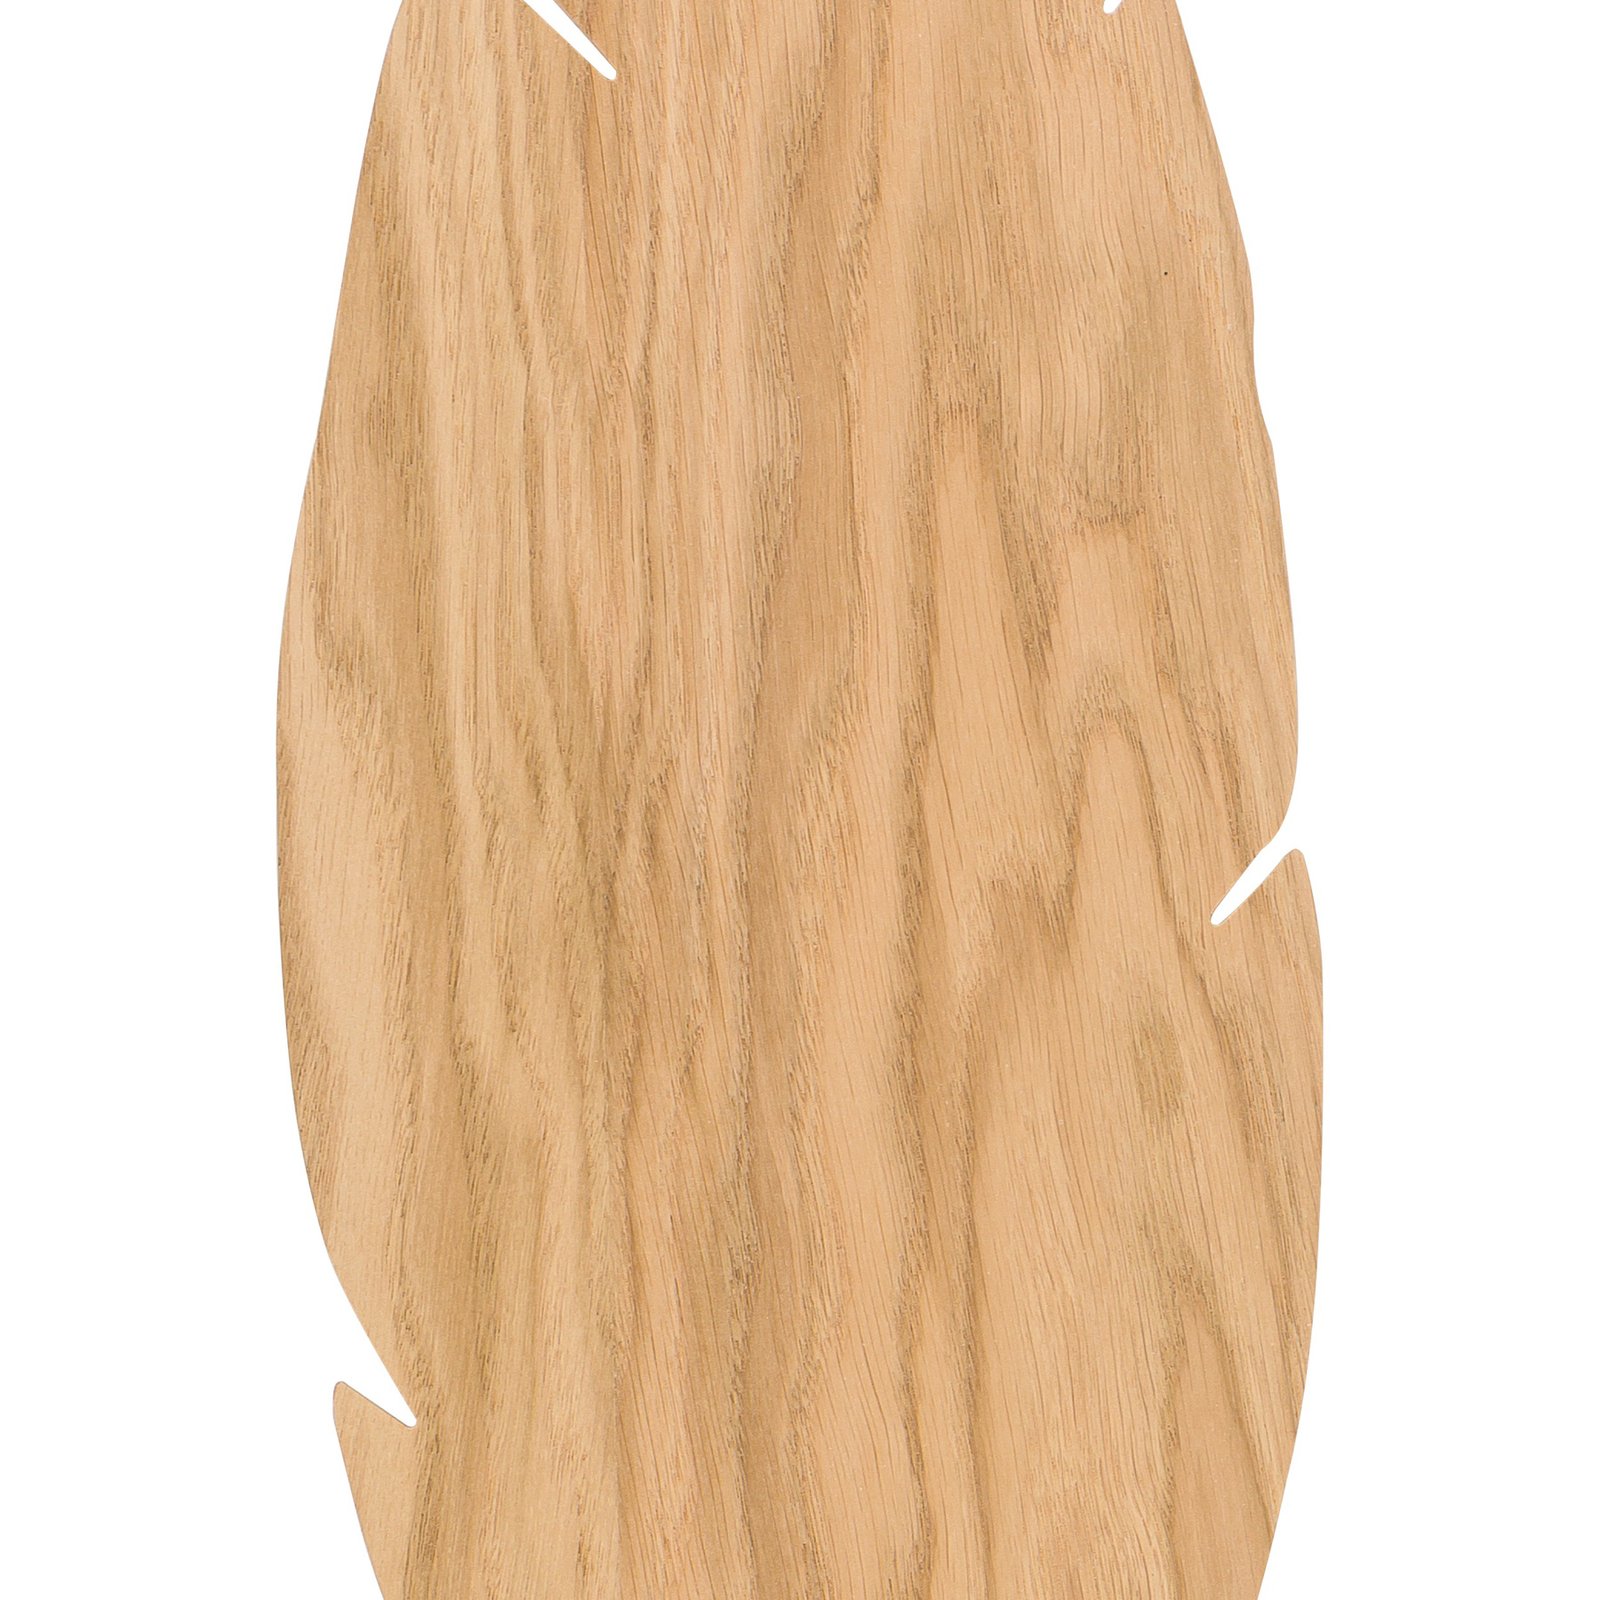 Envostar stenska svetilka Lehti, oblika lista, svetel les, 51 x 18 cm